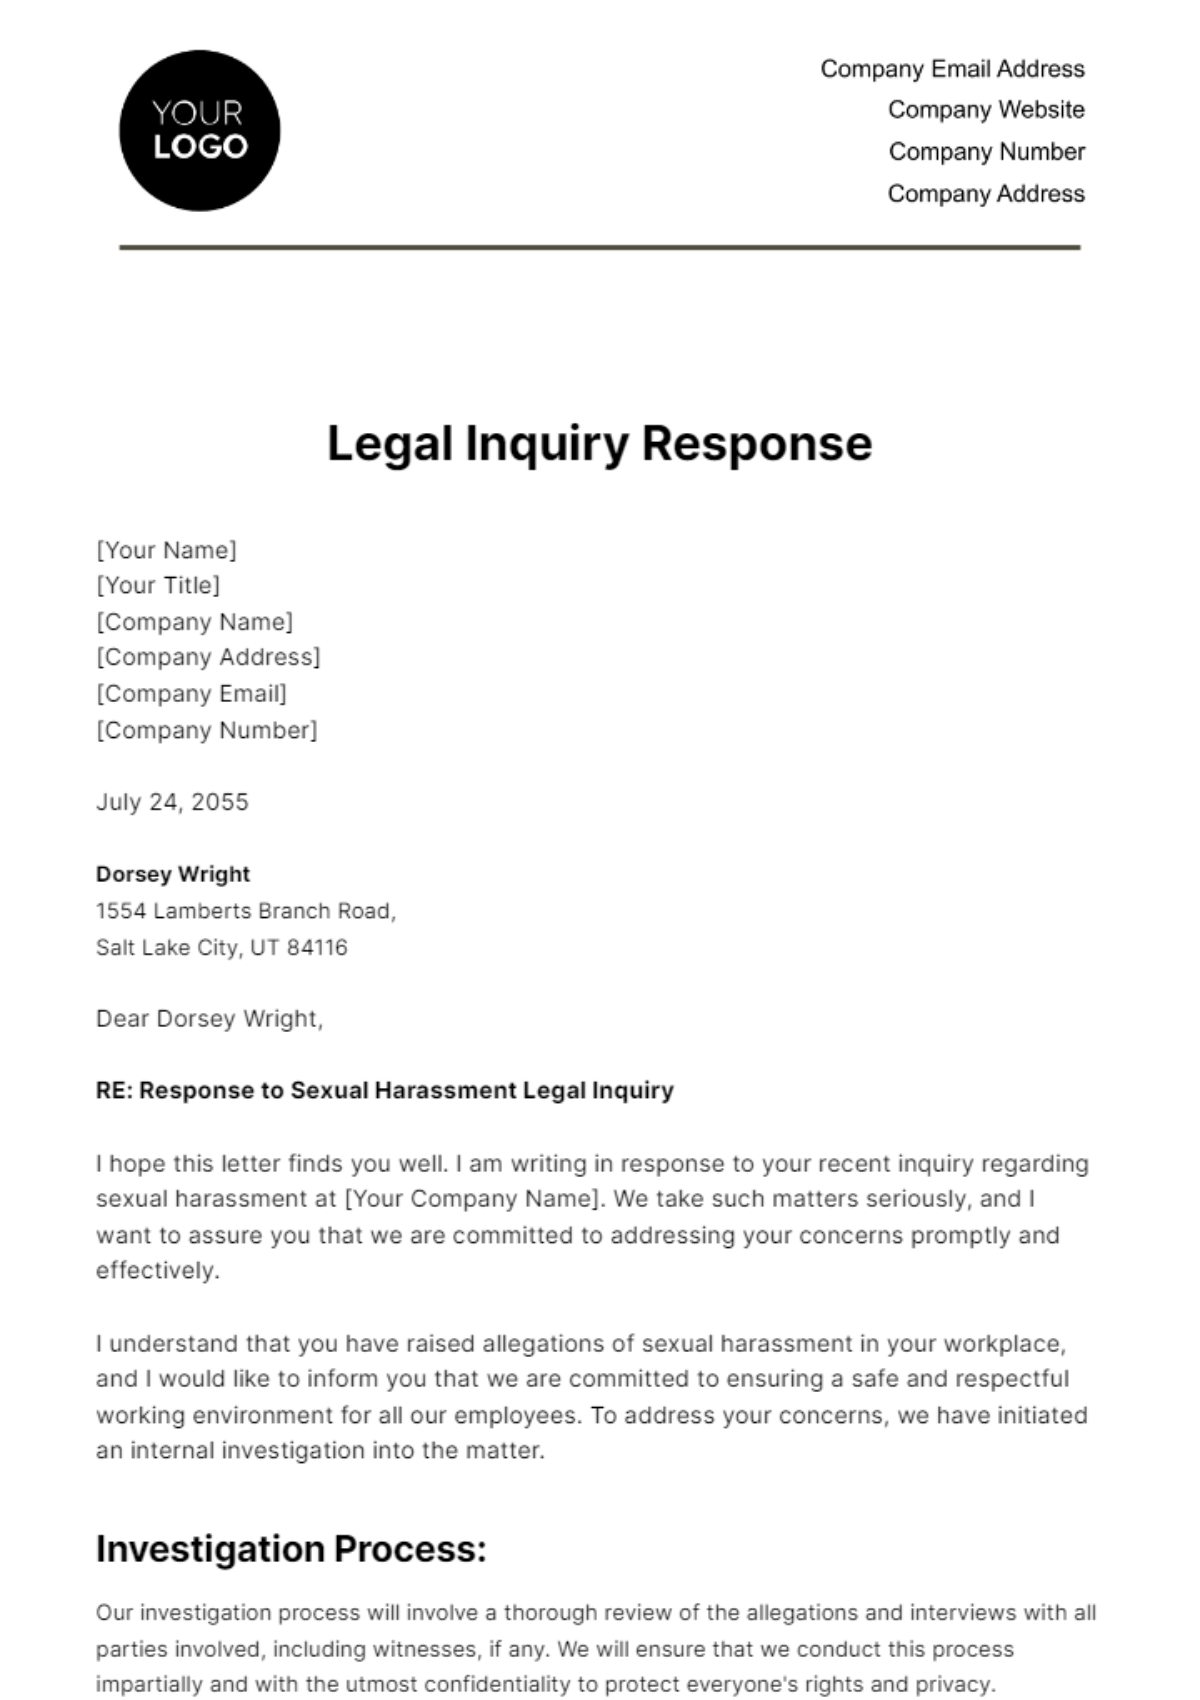 Legal Inquiry Response HR Template